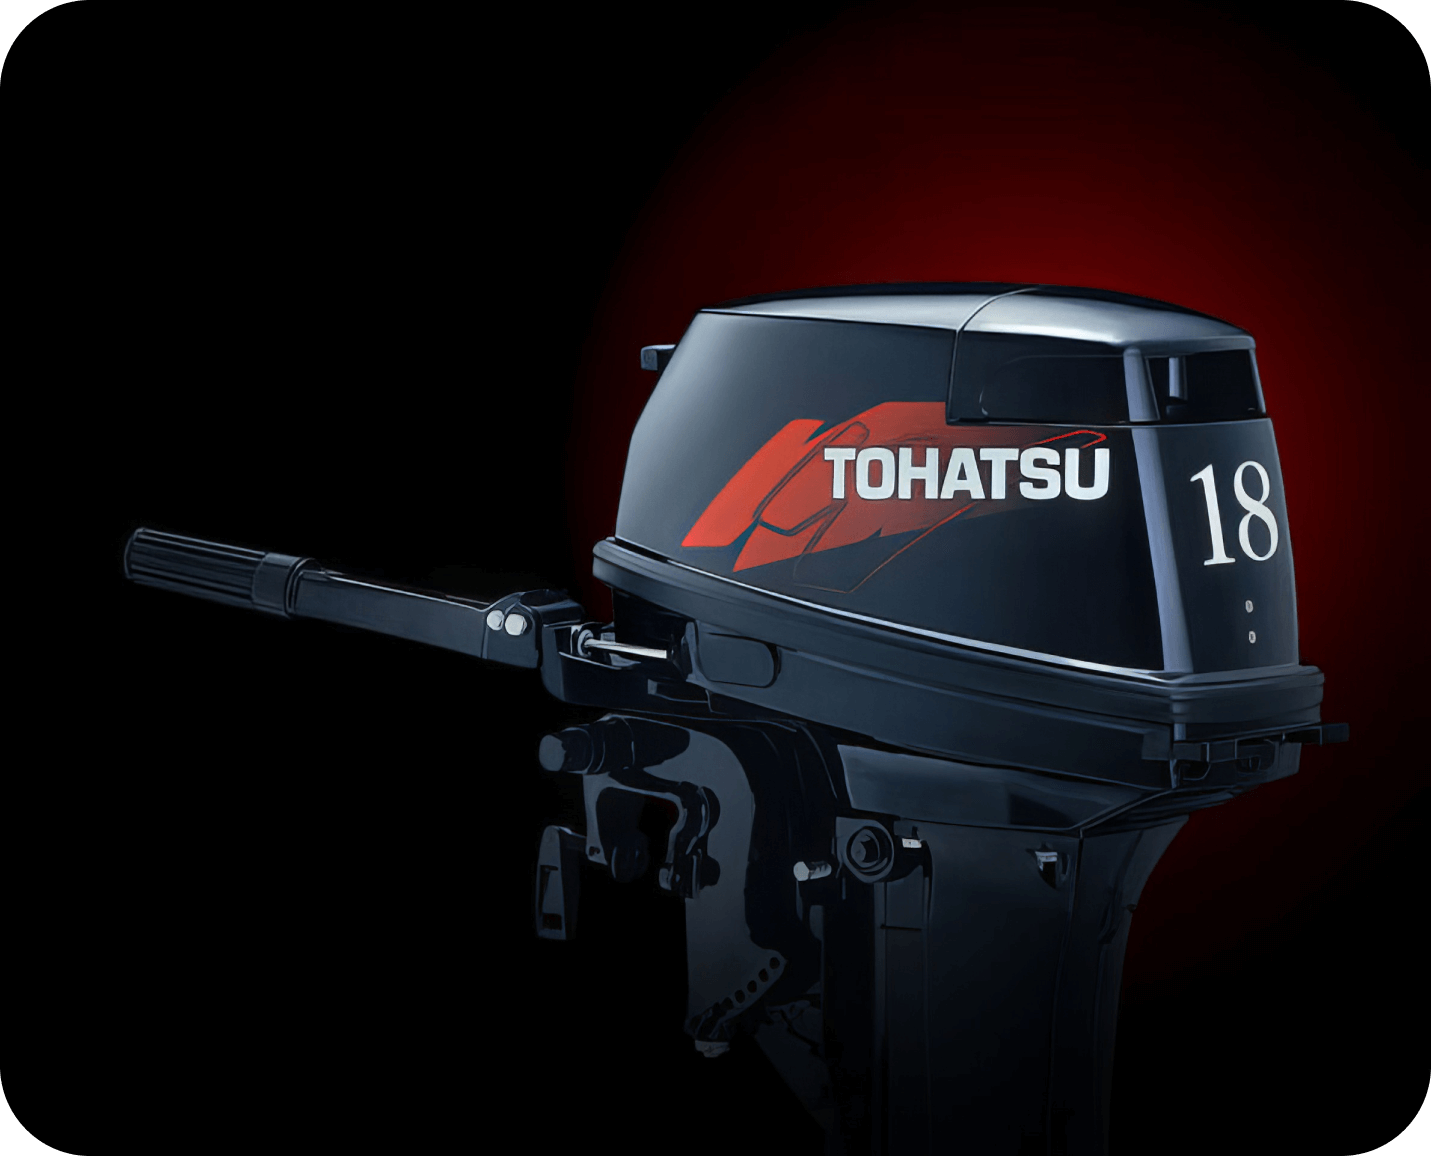 Лодочный мотор Tohatsu 18. Лодочный мотор Tohatsu m 18e2 s. Tohatsu m 18 e2 s. Tohatsu 9.9 и 18. Купить лодочный тохатсу 9.9